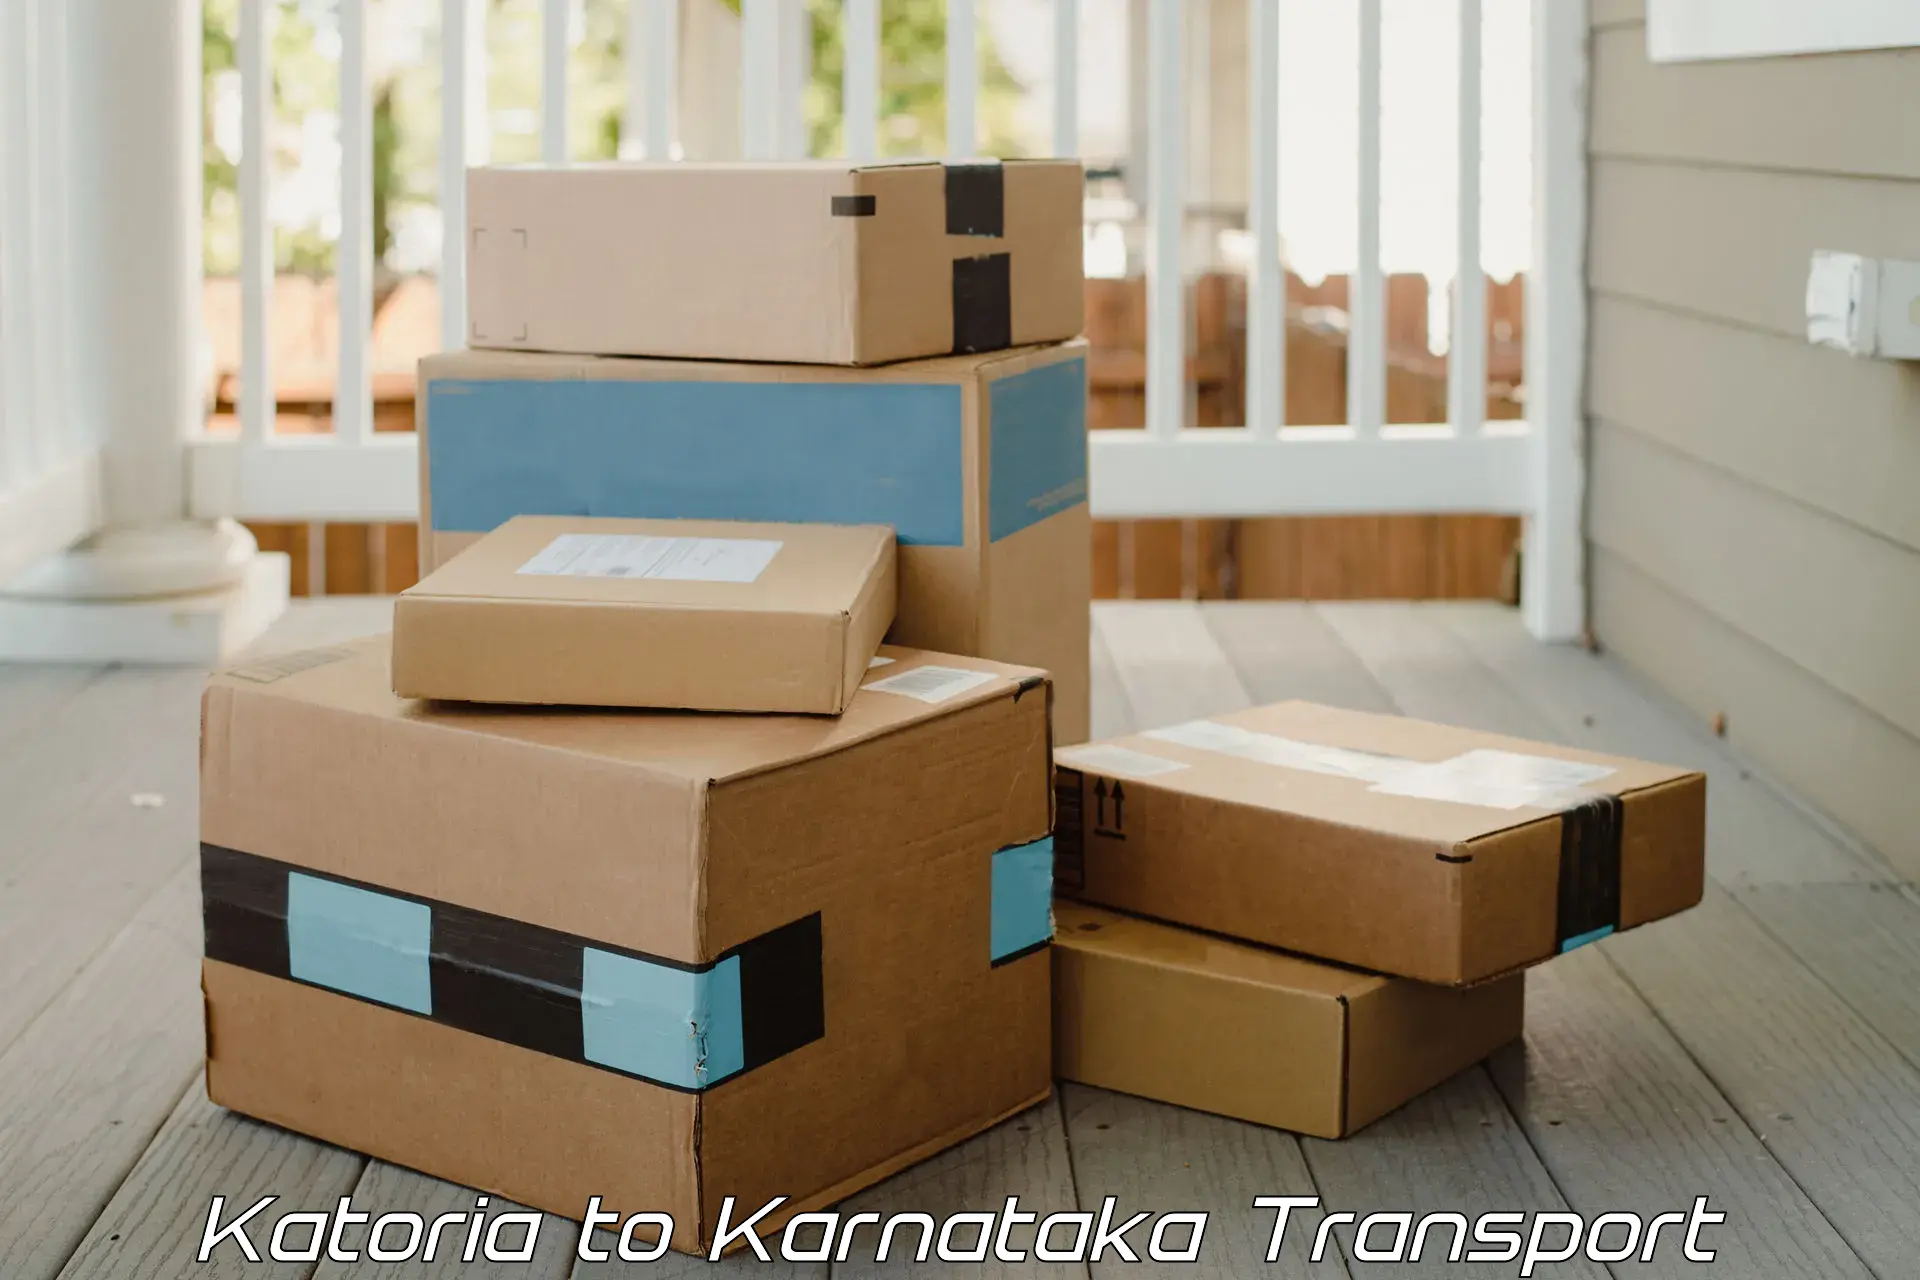 Delivery service Katoria to Koppal